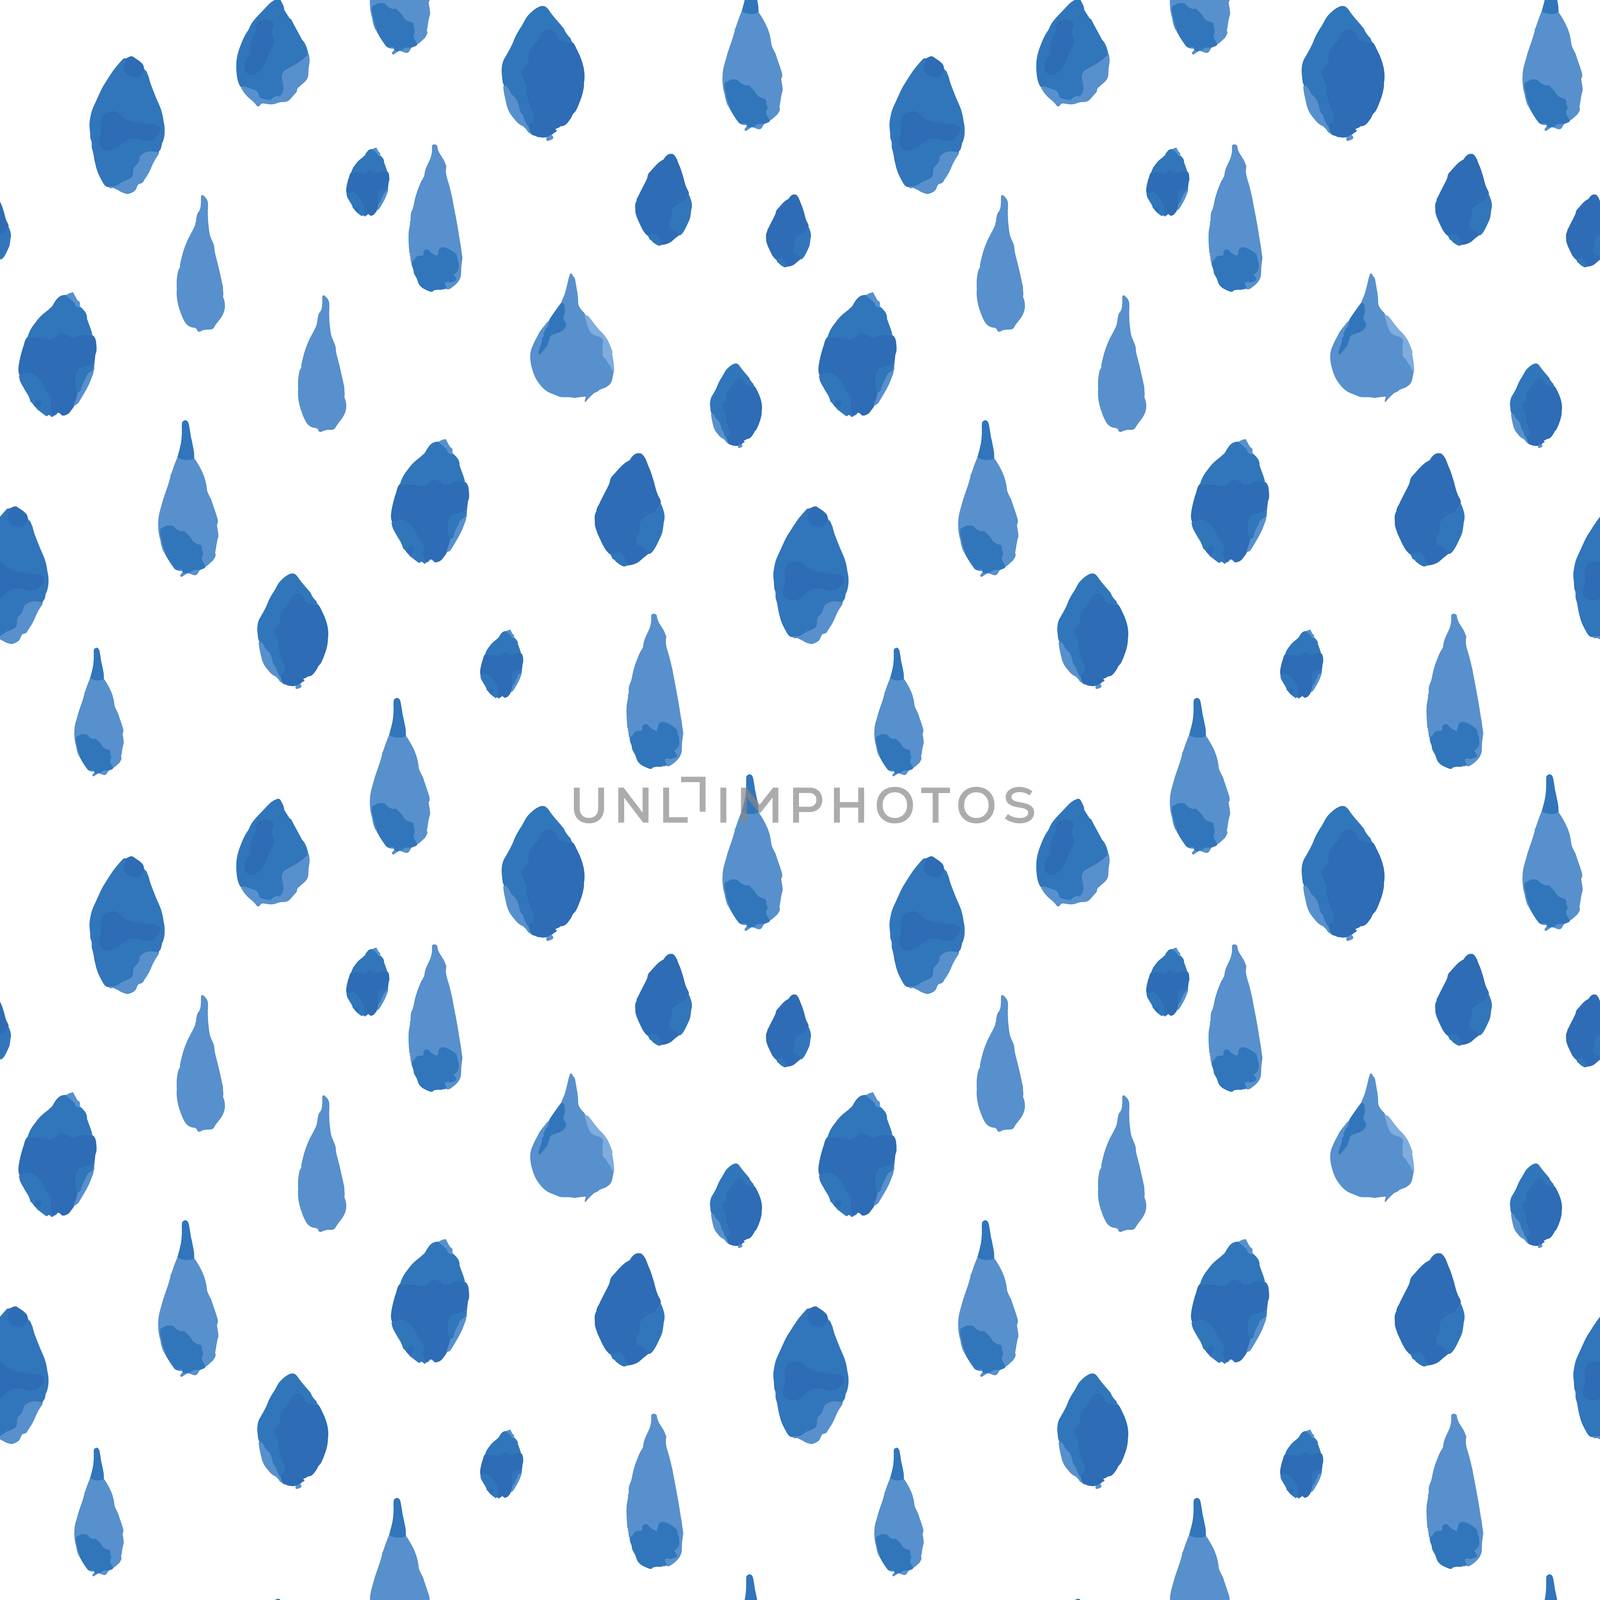 Rain drops seamless pattern. Hand drawn vector illustration